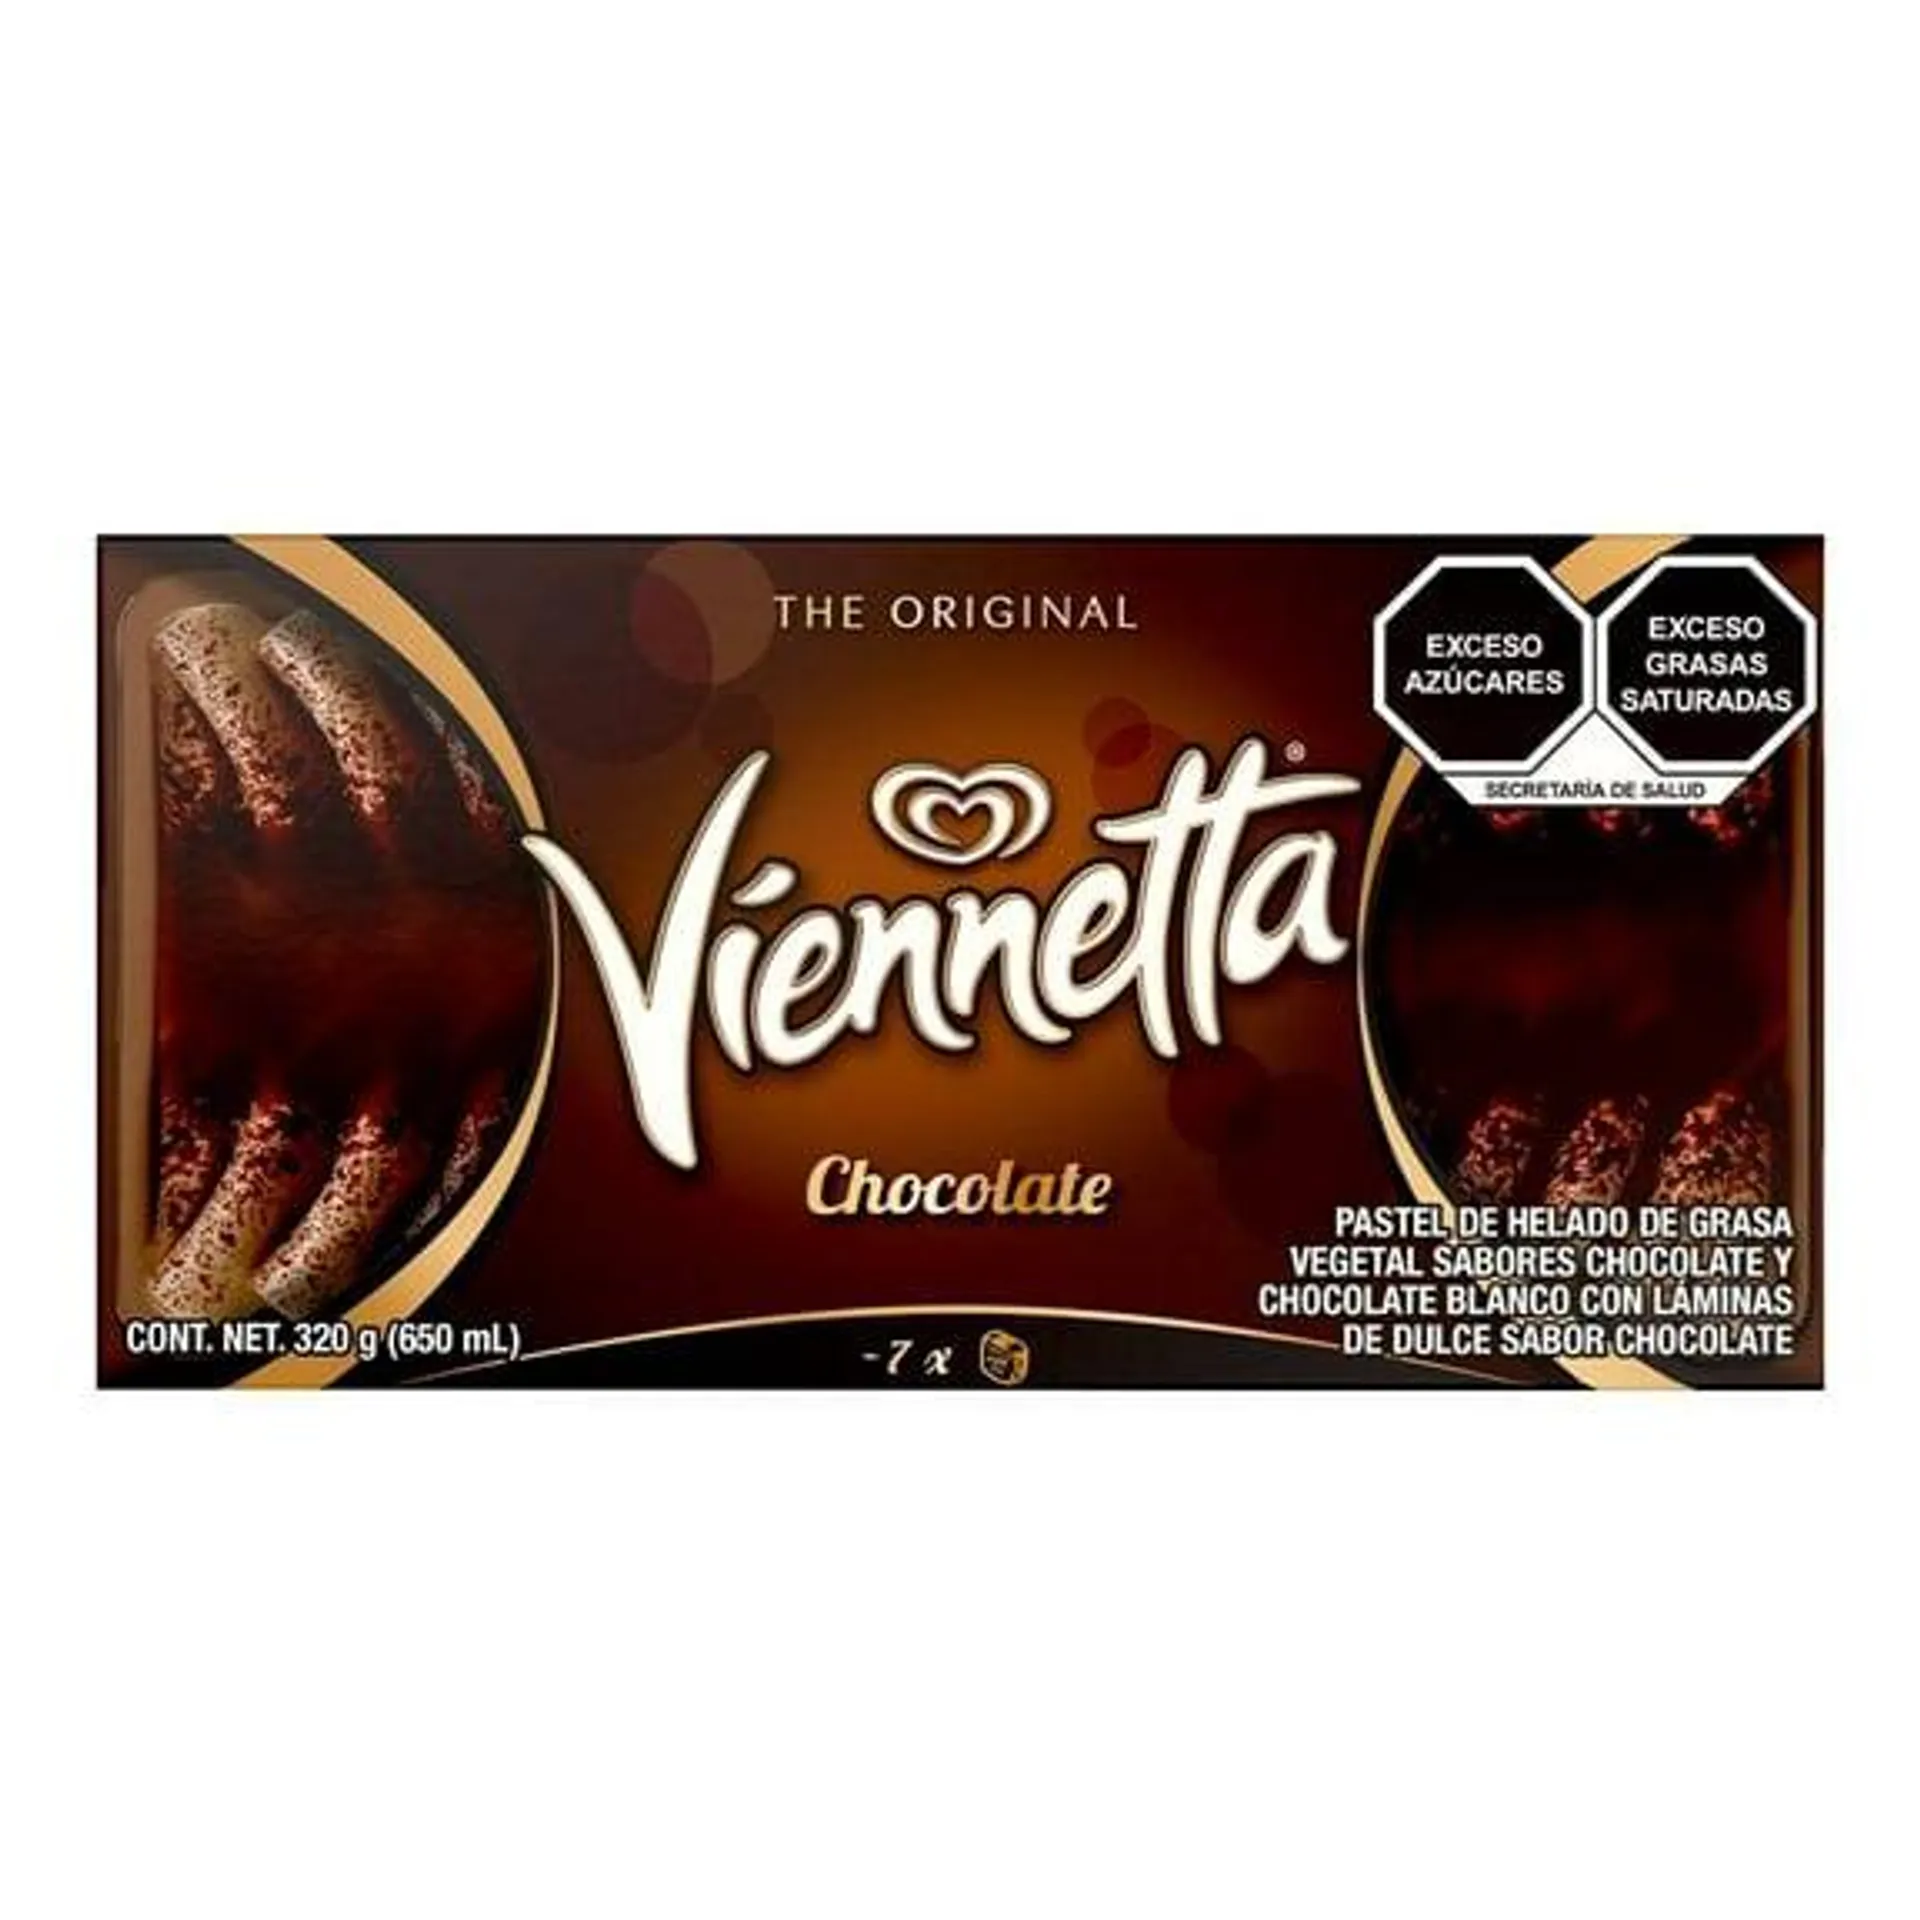 Pastel de helado Holanda Viennetta chocolate 650 ml